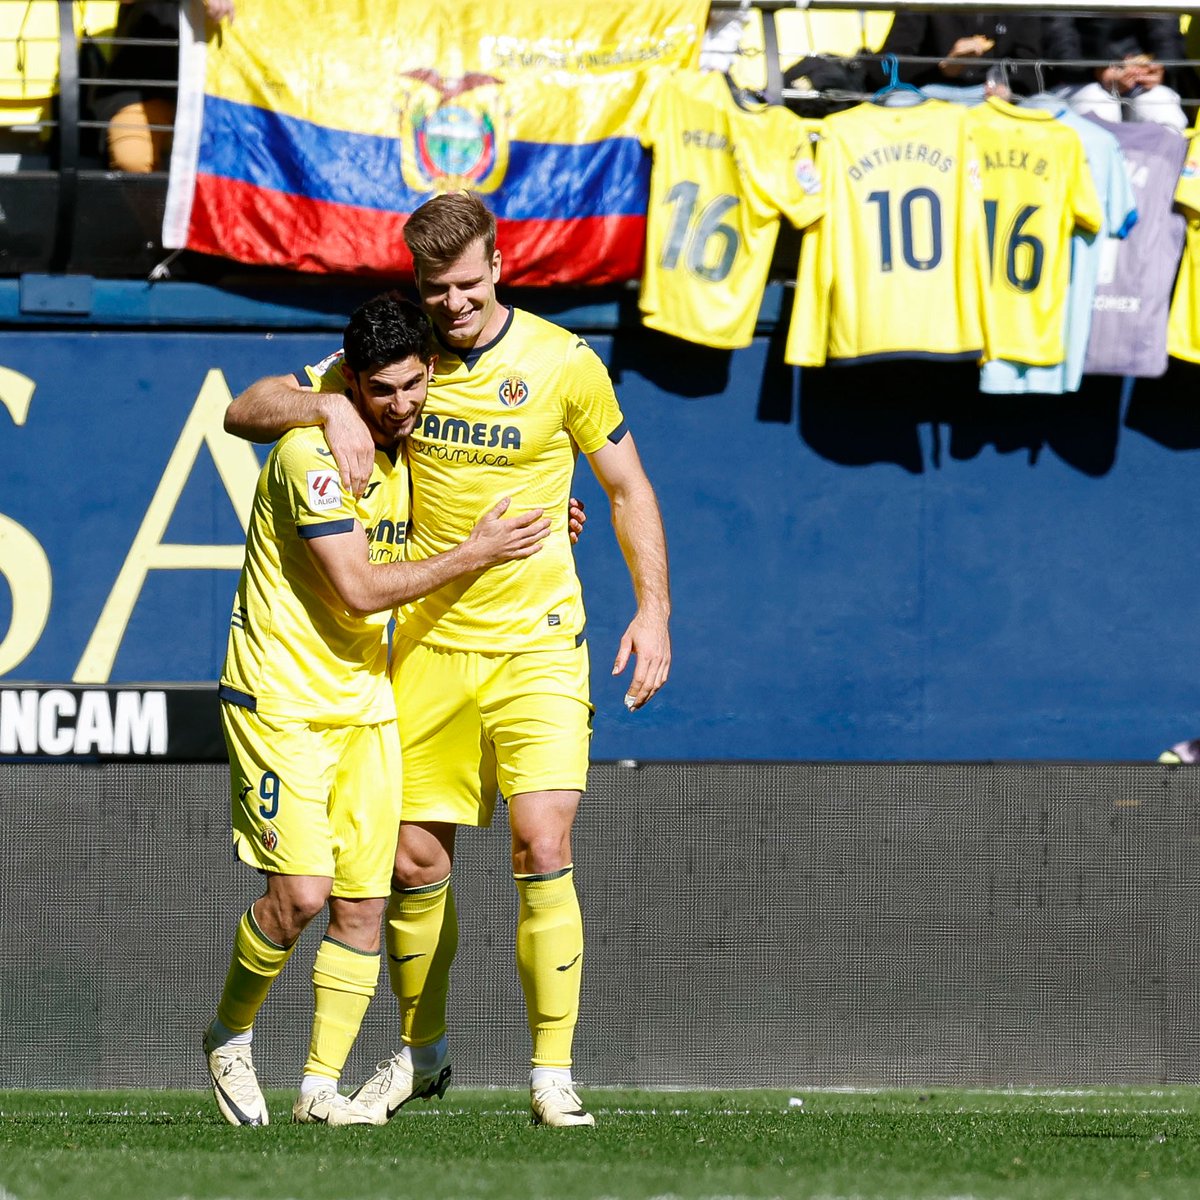 GOALS GALORE.

That's FOUR for @VillarrealCFen! 🤯 

#VillarrealGranada